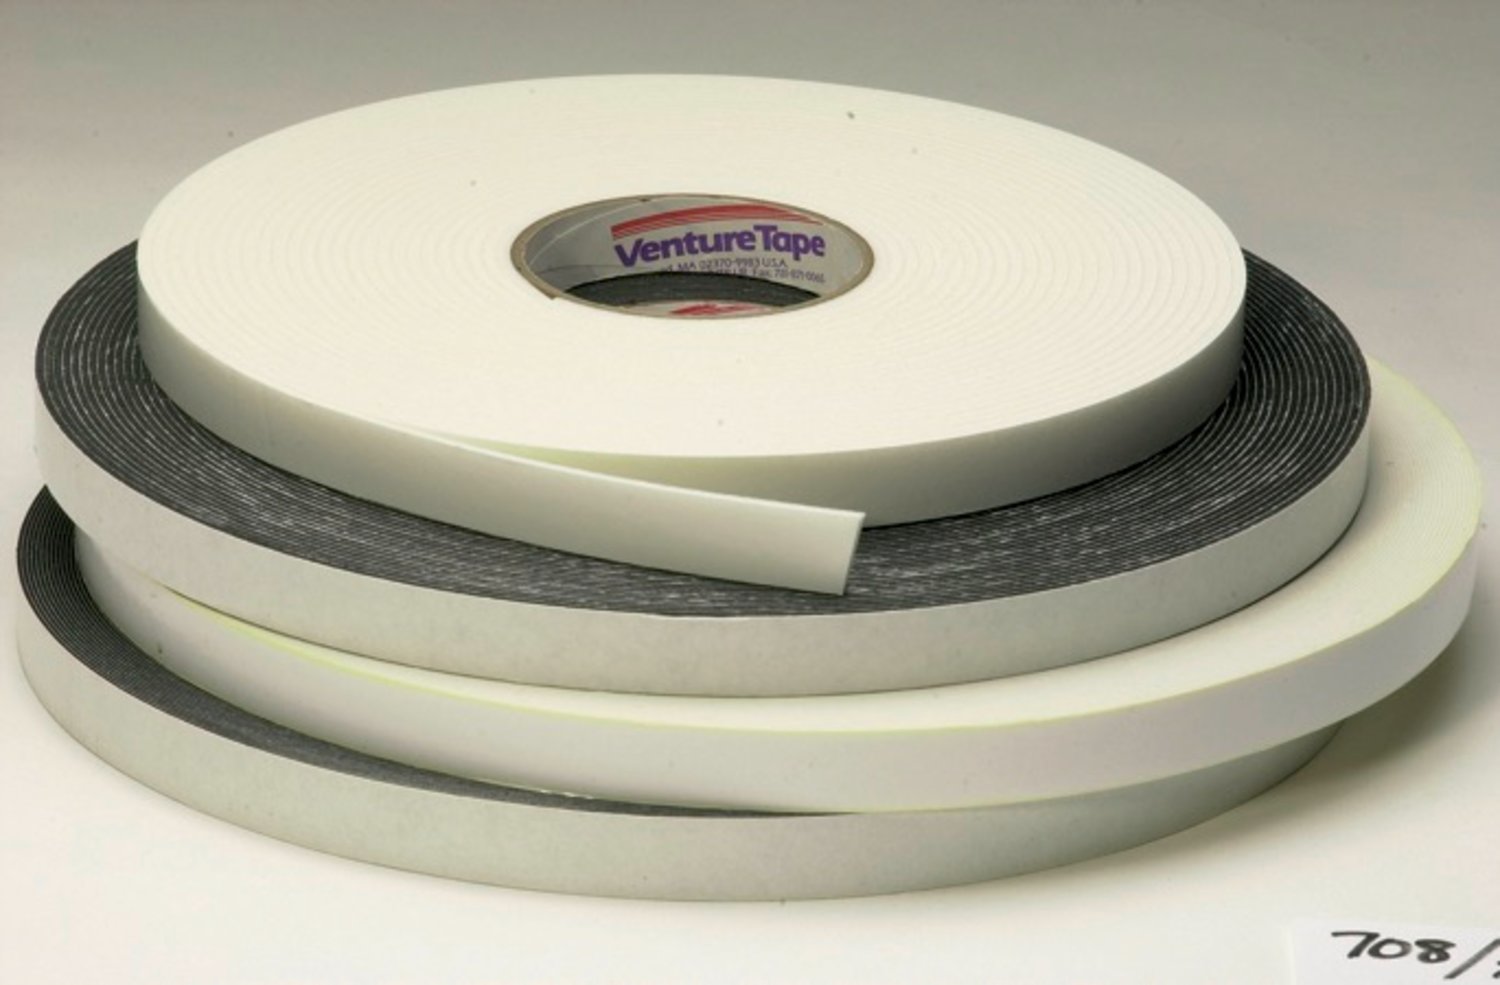 7100171436 - 3M Venture Tape Double Sided Polyethylene Foam Glazing Tape VG7132,
White, 3/8 in 250 ft, 31 mil, 53 rolls per case